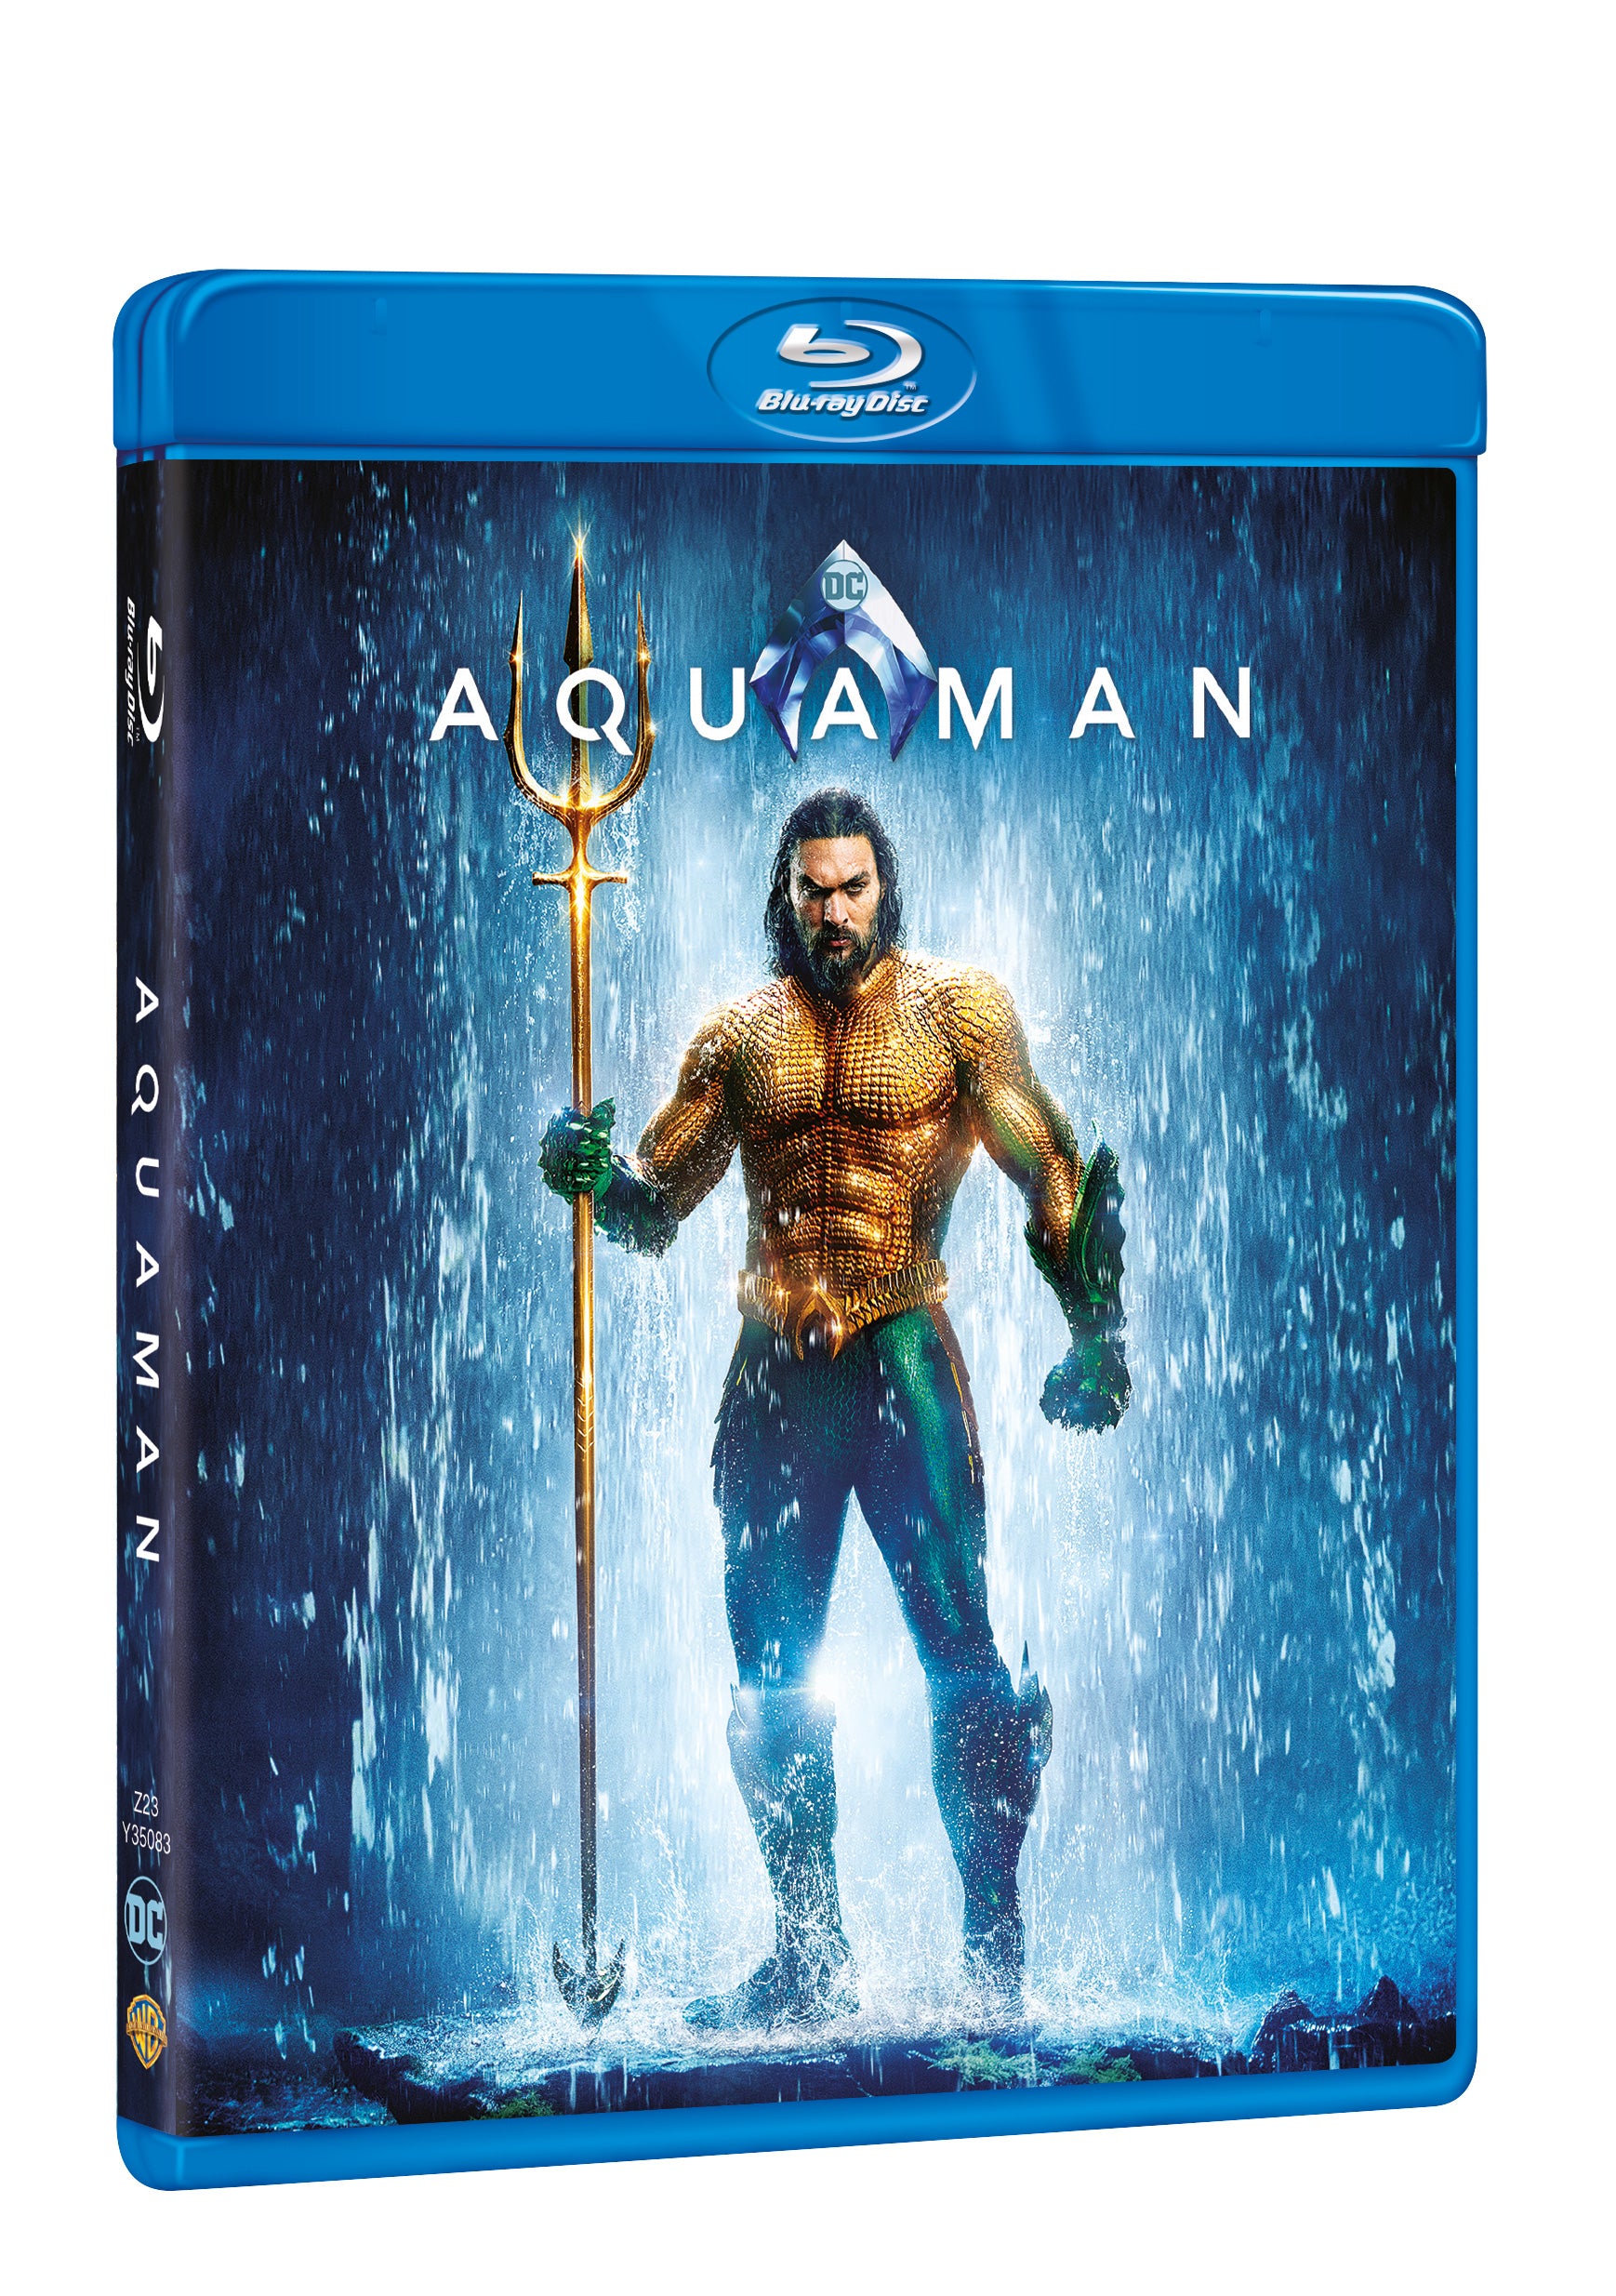 Aquaman BD / Aquaman - Czech version